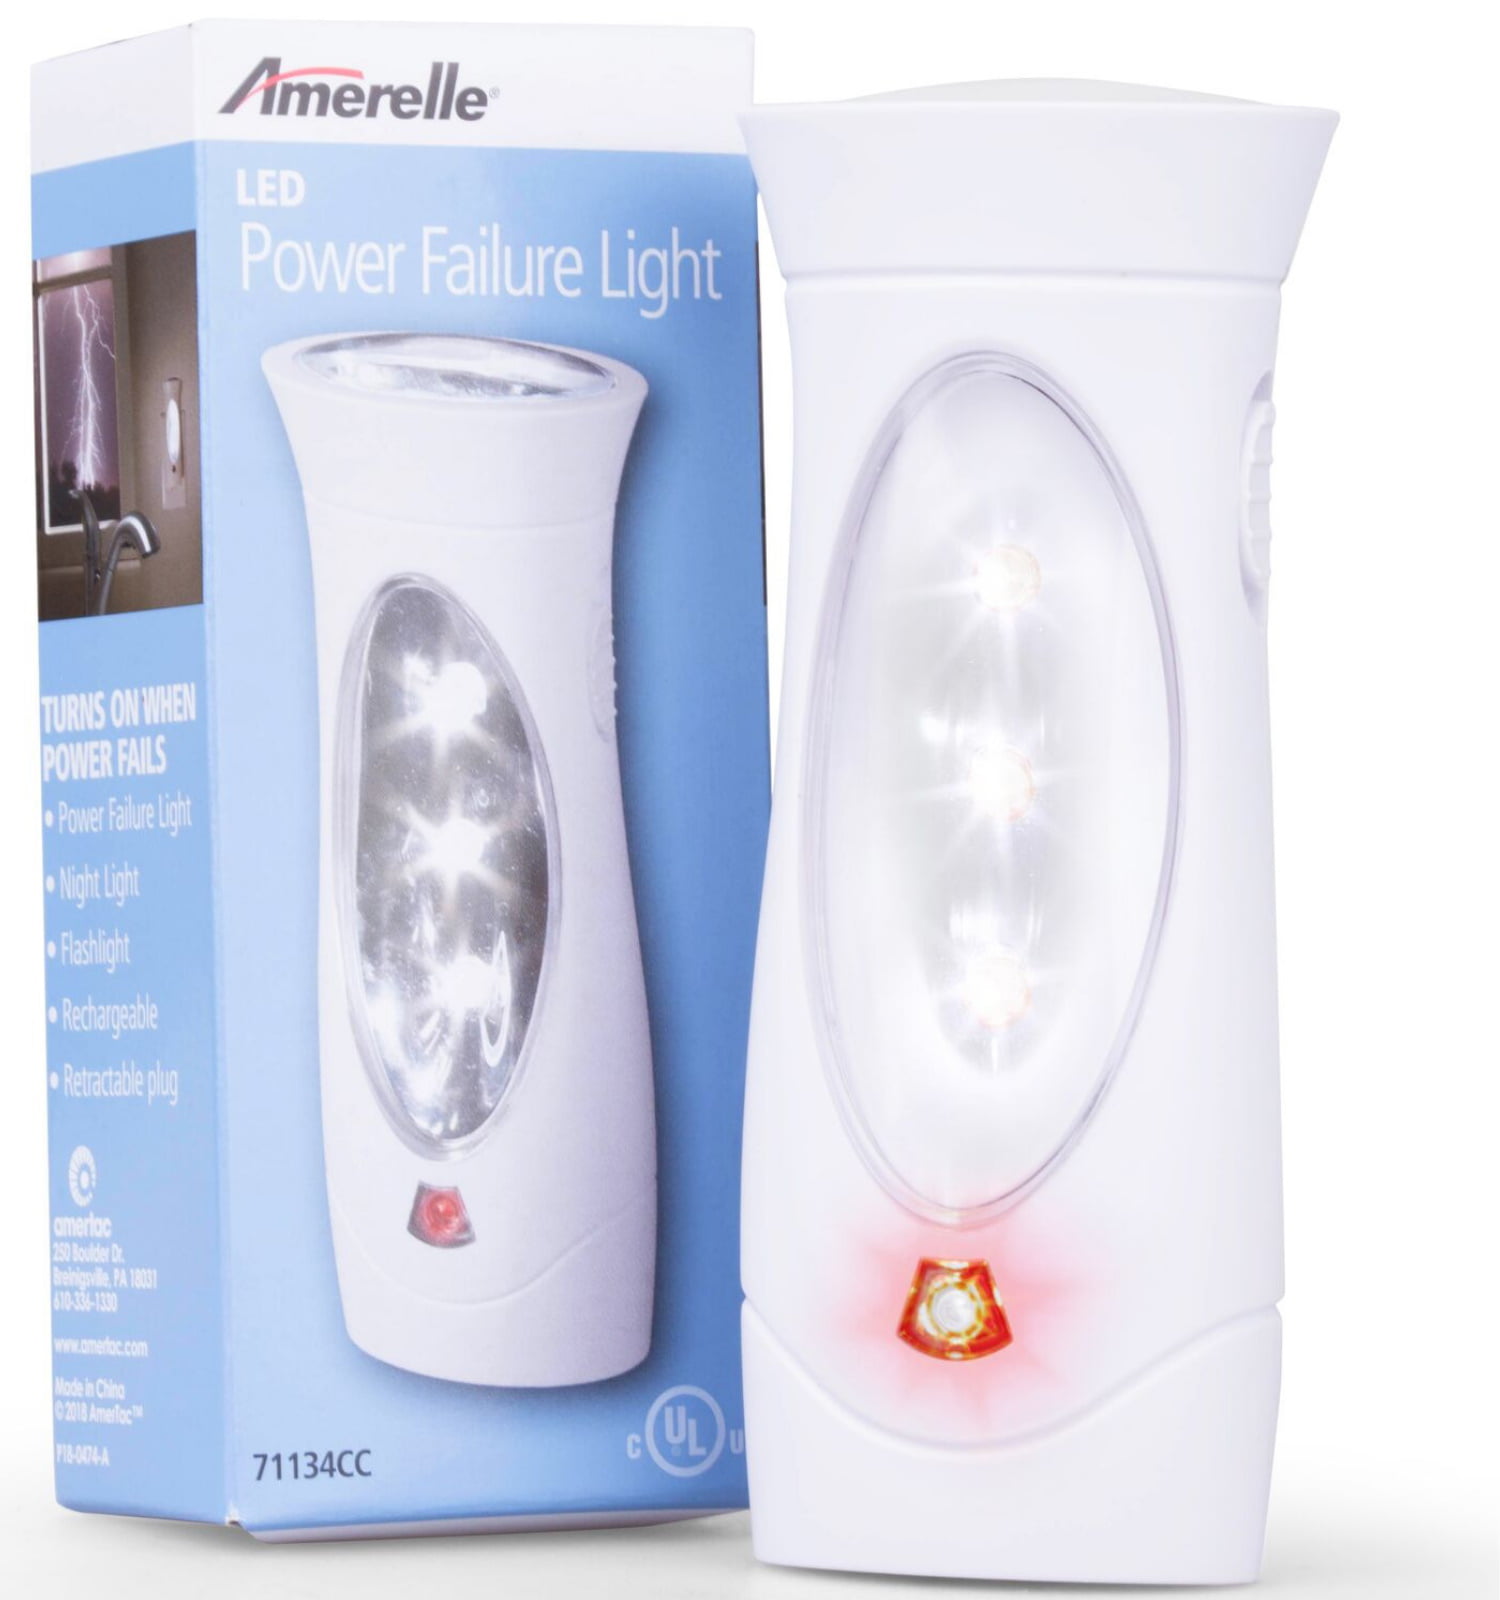 Amerelle Power Failure Lite LED Light 71138 